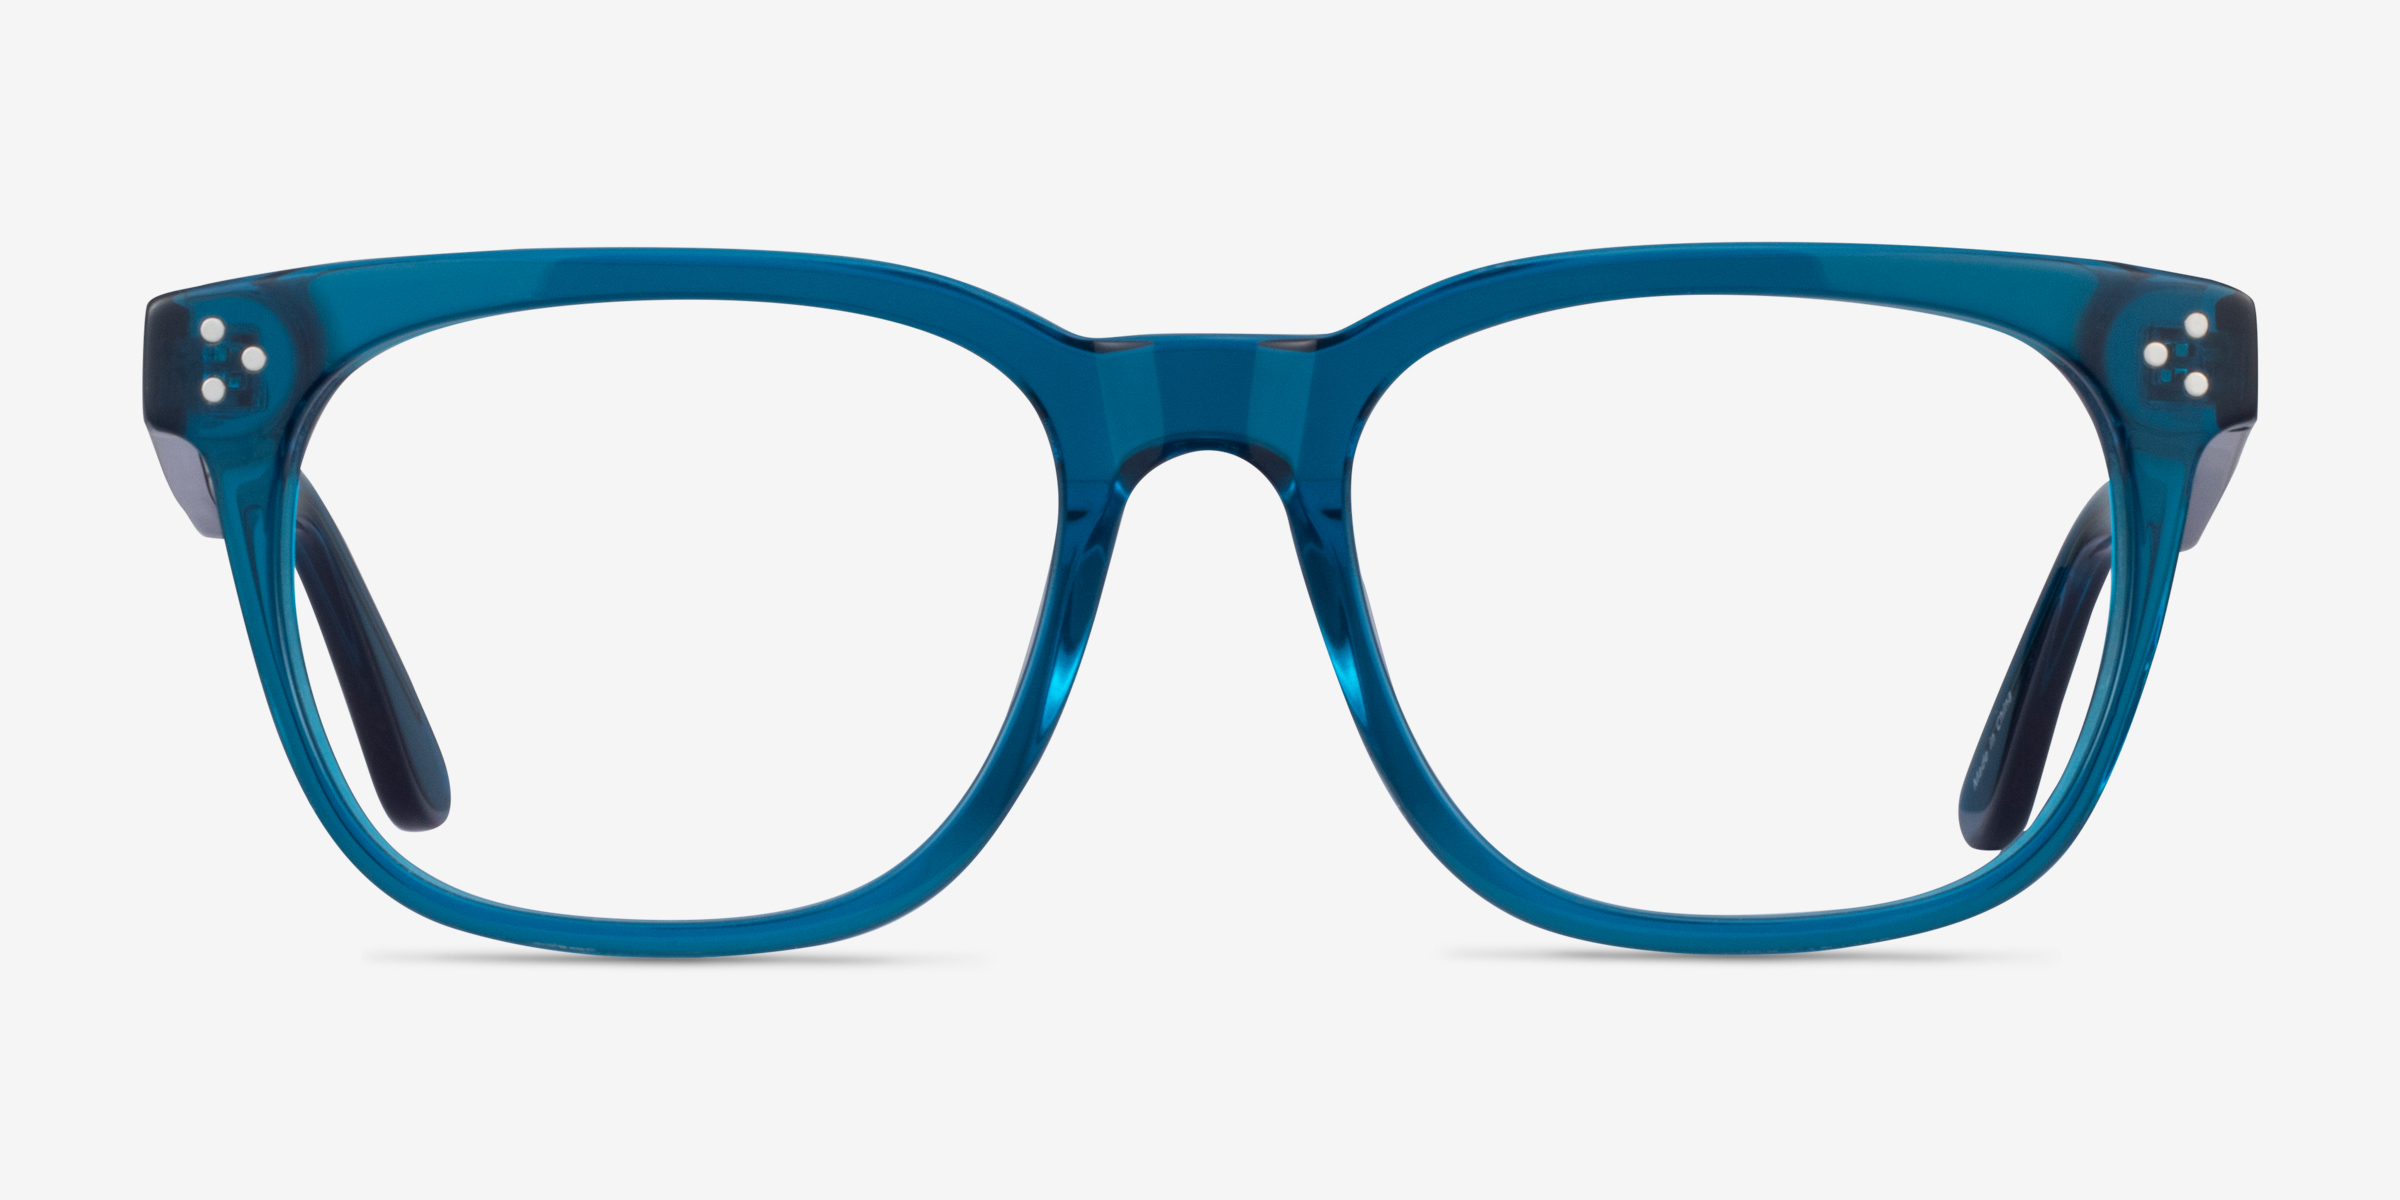 Adriatic Square Clear Blue Full Rim Eyeglasses | Eyebuydirect